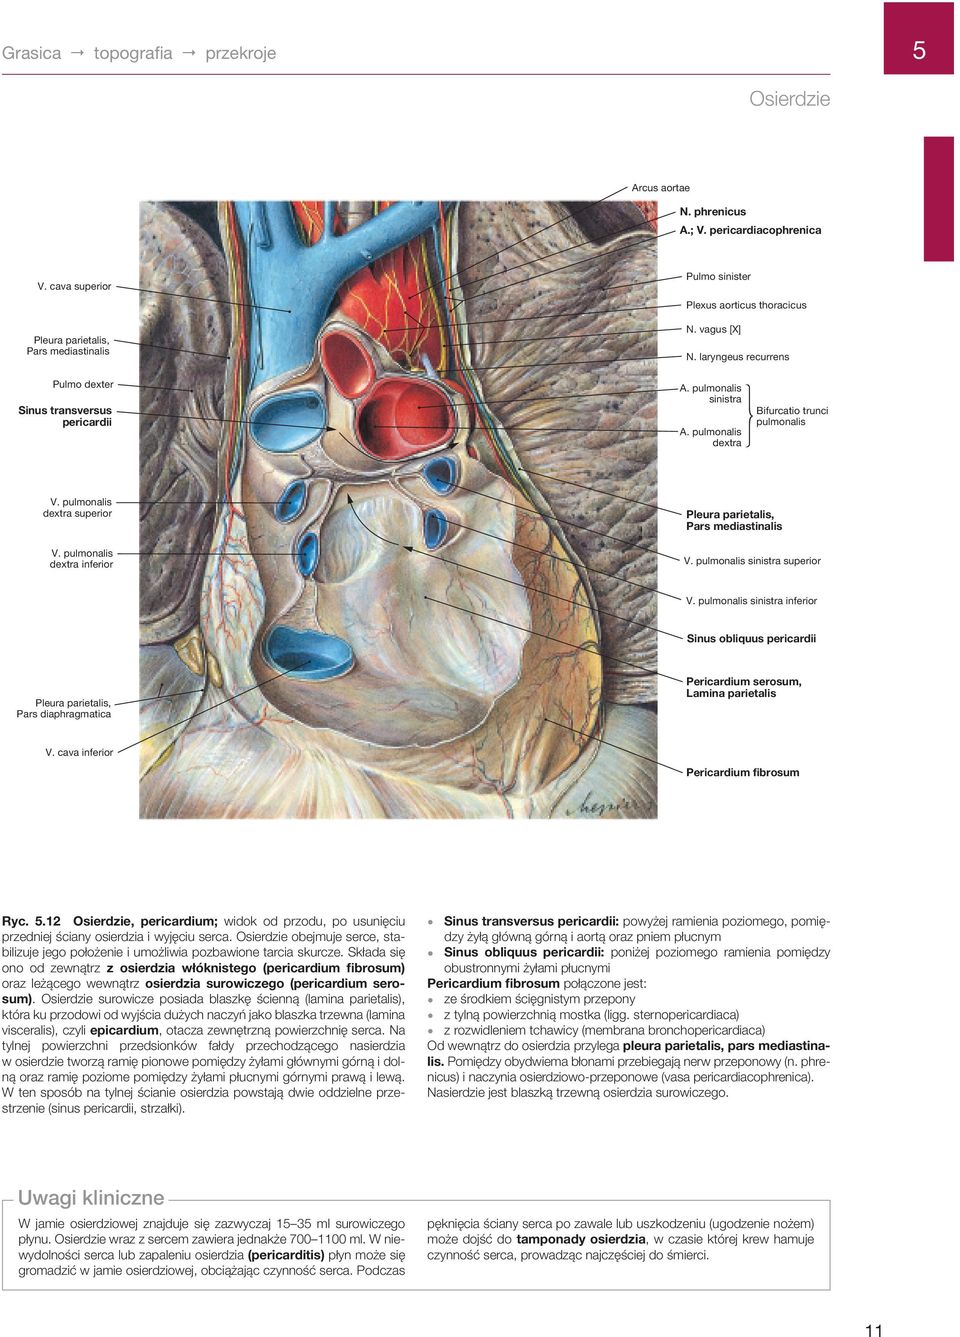 pulmonalis dextra inferior Pleura parietalis, Pars mediastinalis V. pulmonalis sinistra superior V.